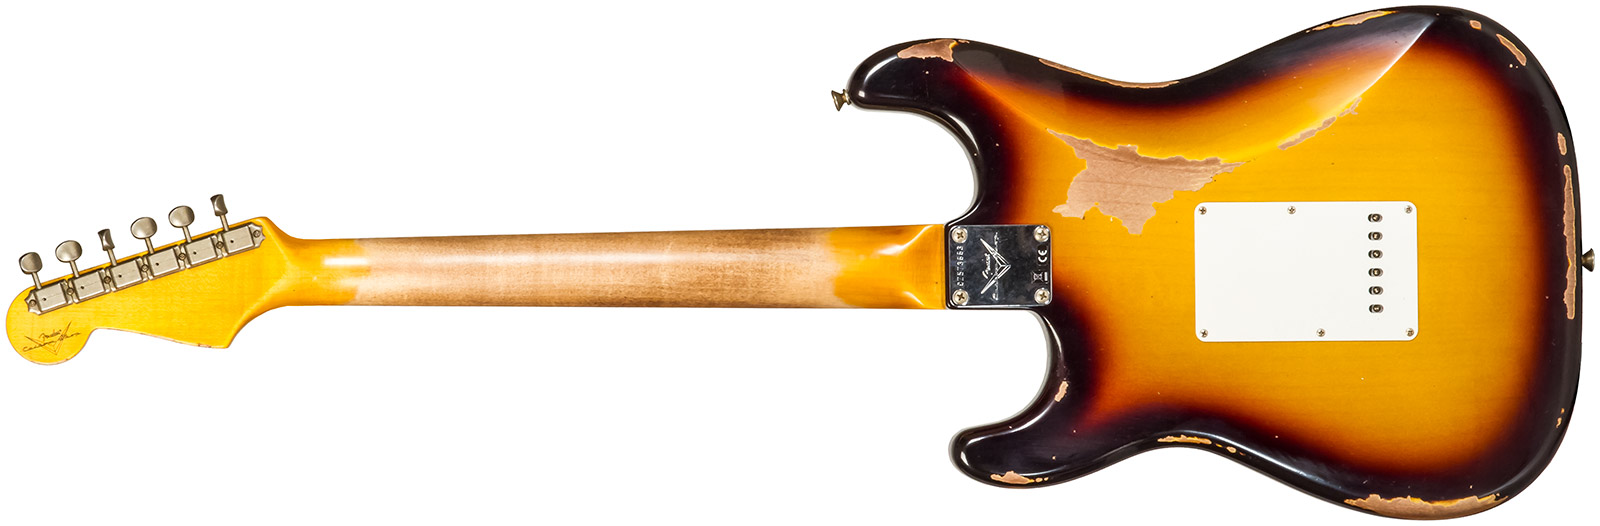 Fender Custom Shop Strat 1961 3s Trem Rw #cz573663 - Heavy Relic Aged 3-color Sunburst - E-Gitarre in Str-Form - Variation 1